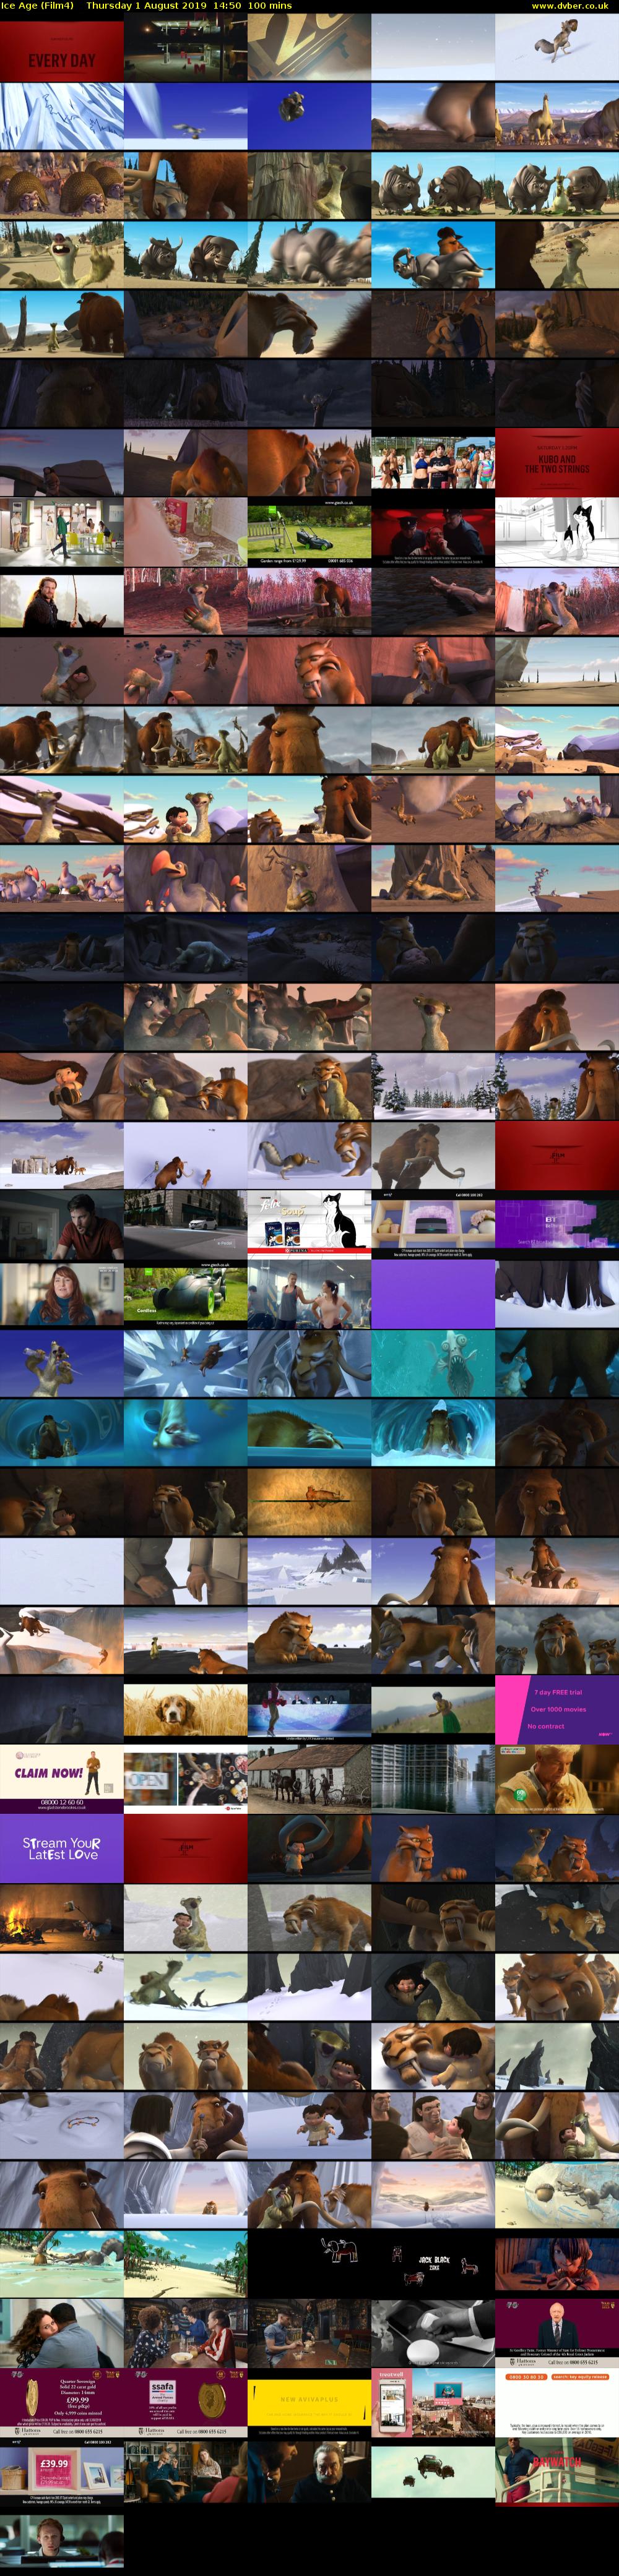 Ice Age (Film4) Thursday 1 August 2019 14:50 - 16:30